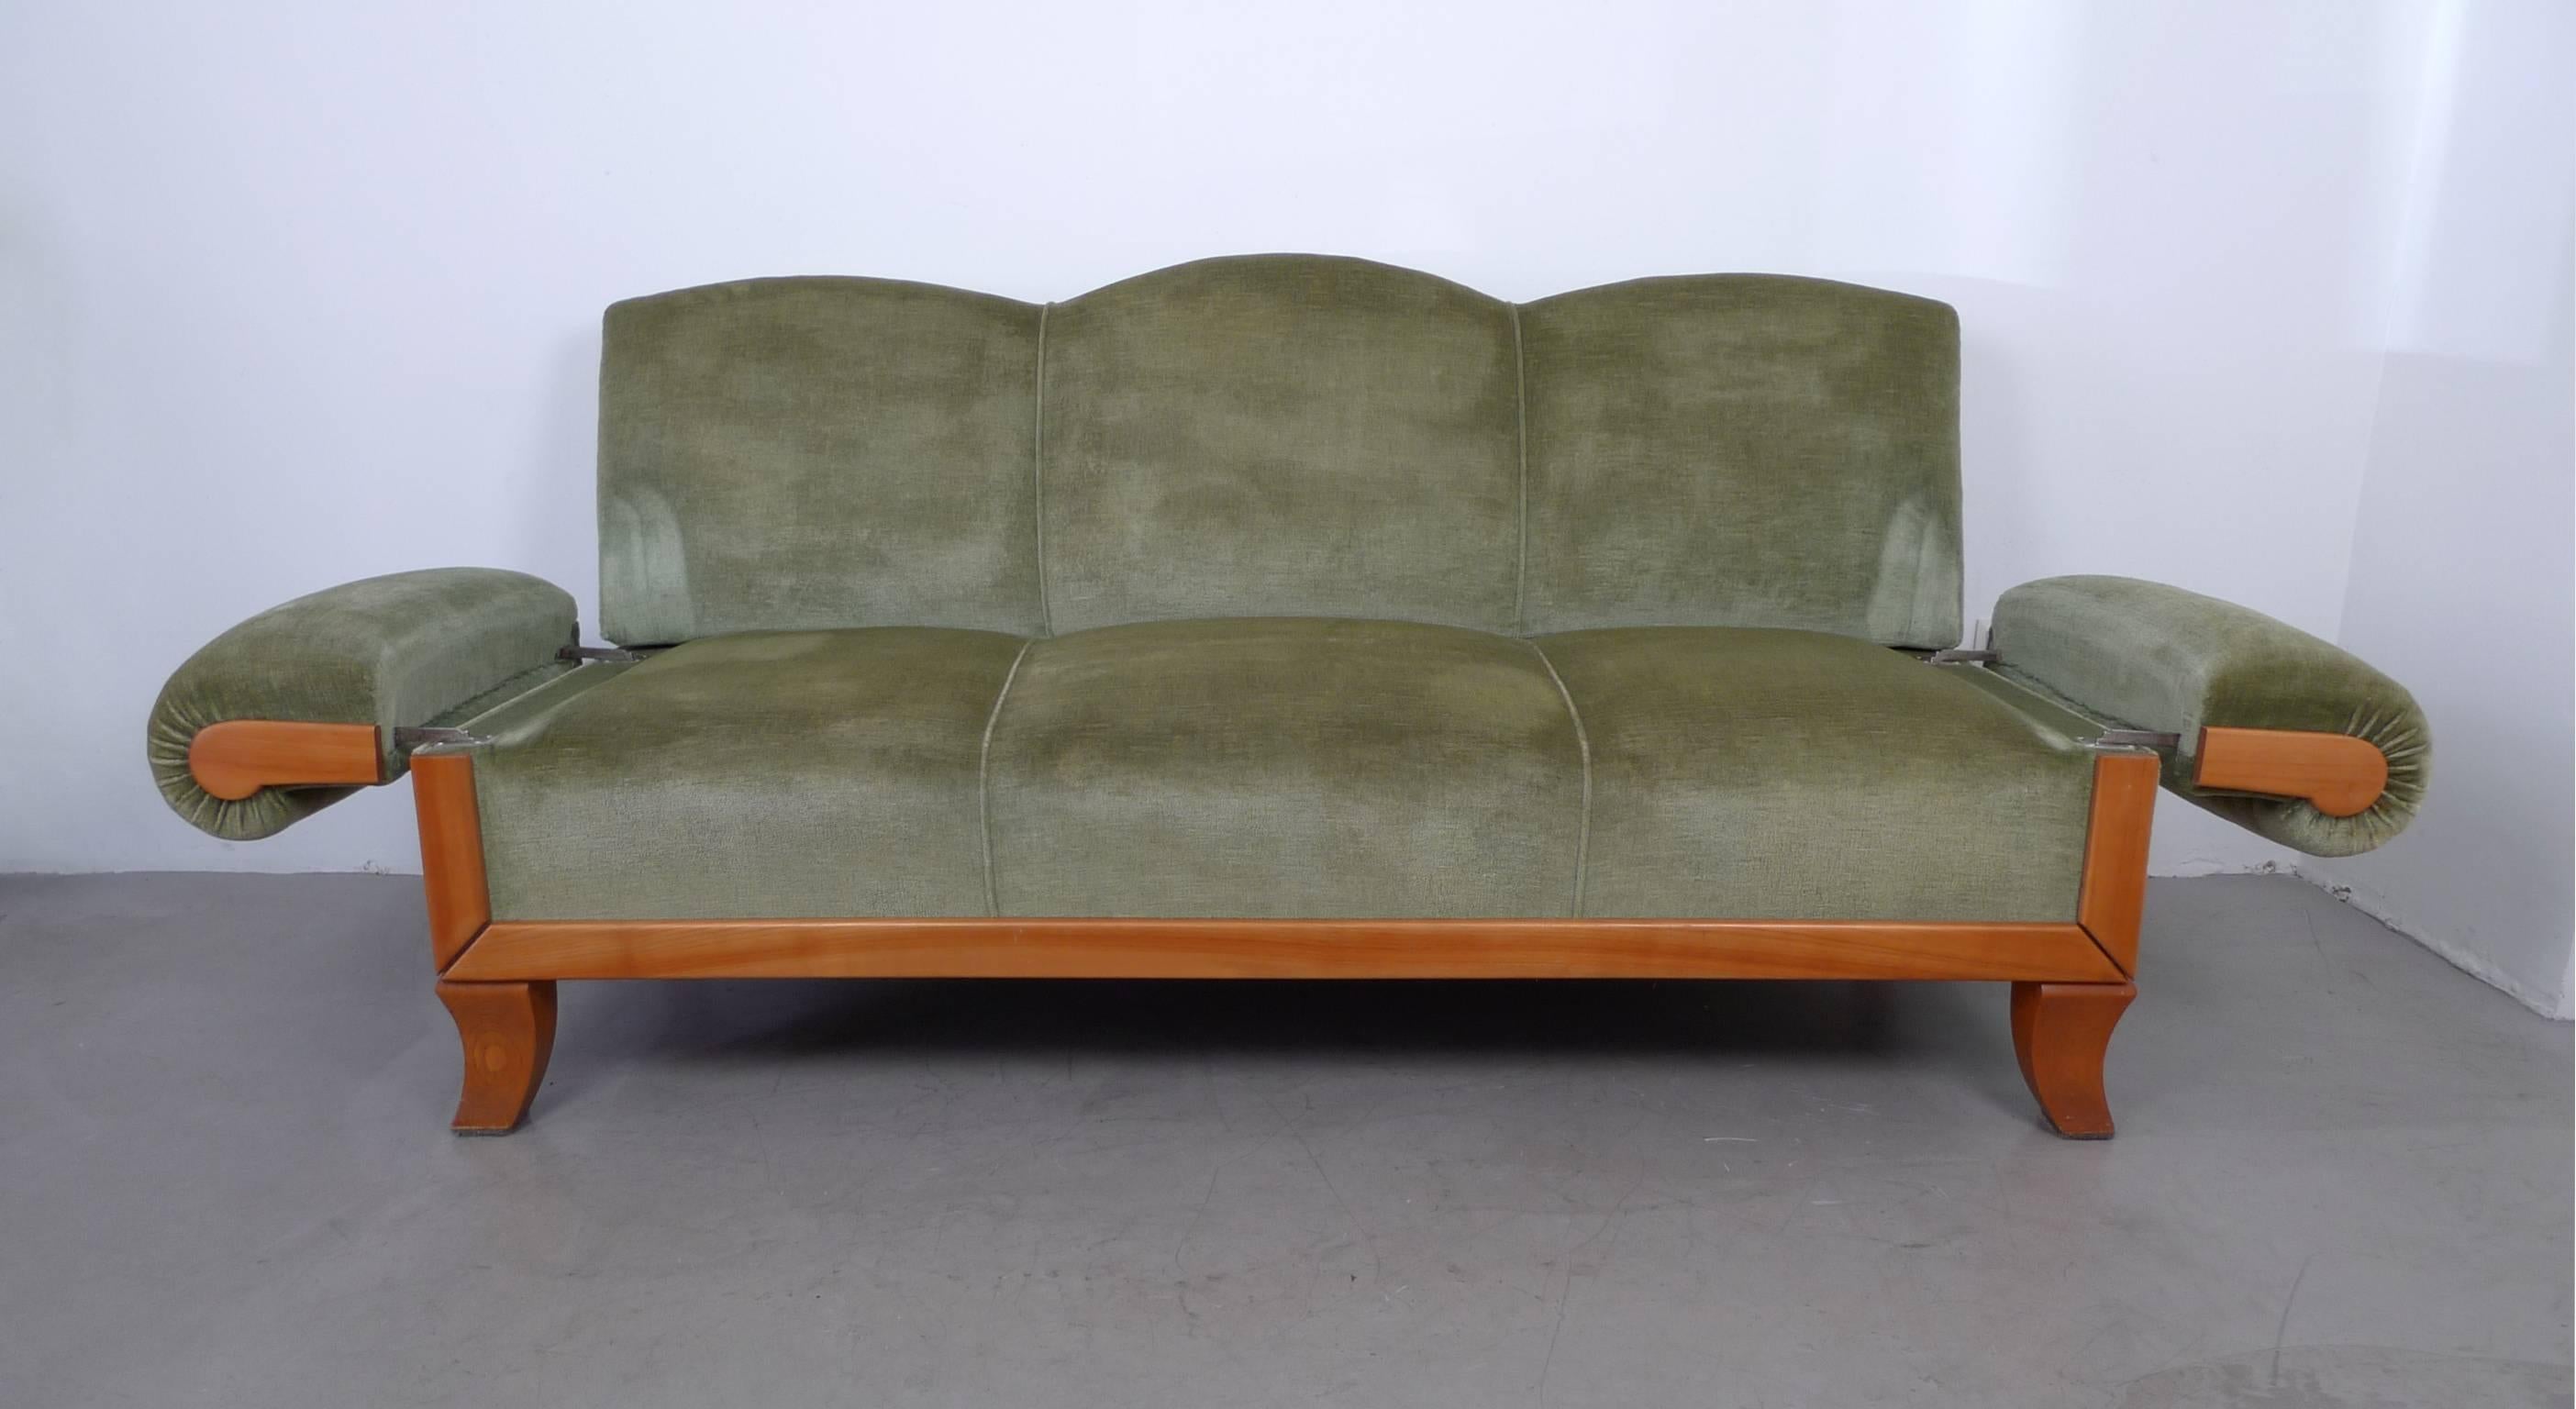 Fabric Three-Seat Cherry Framed Sofa from Germany, 1930s